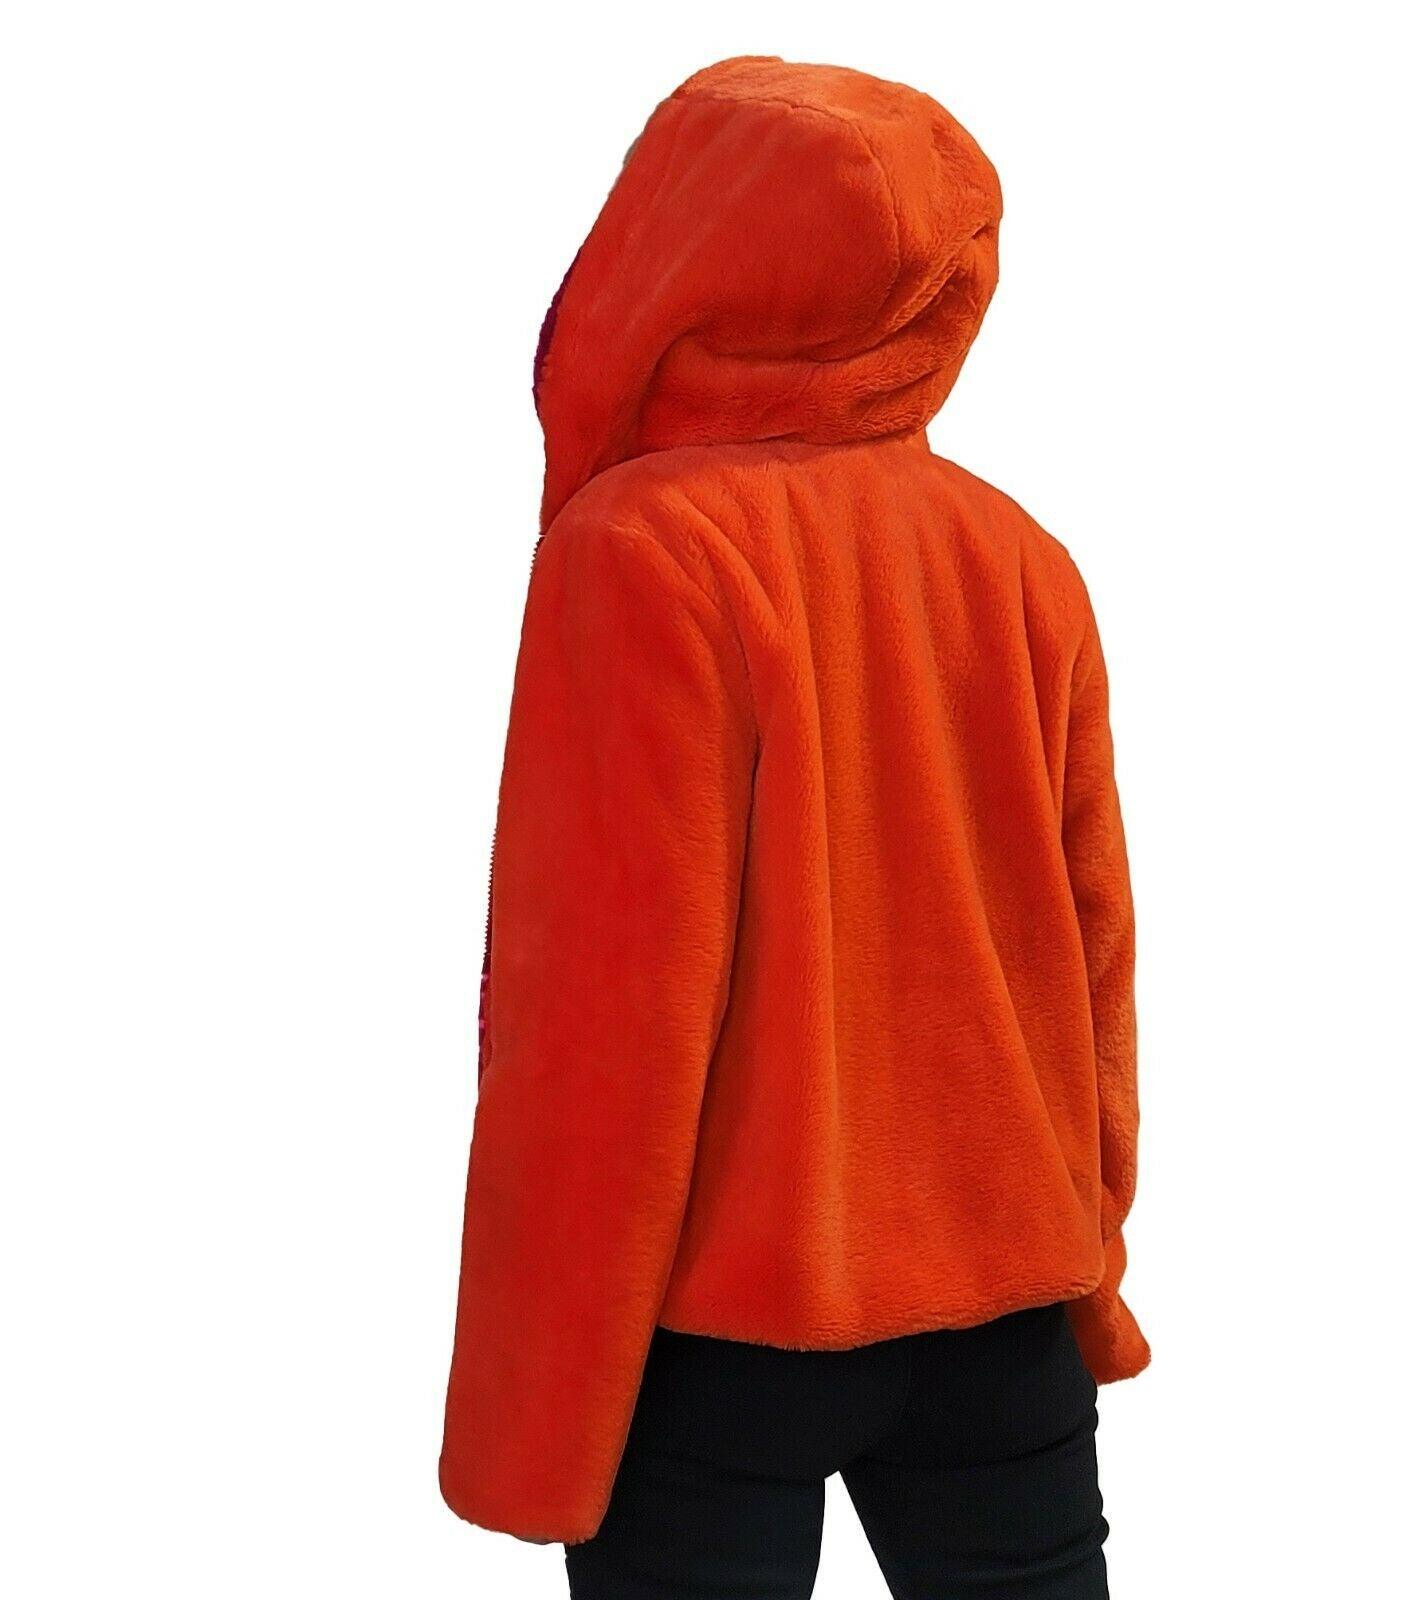 NWT Calvin Klein Jeans Faux Fur Hooded Orange Jacket Size S - SVNYFancy